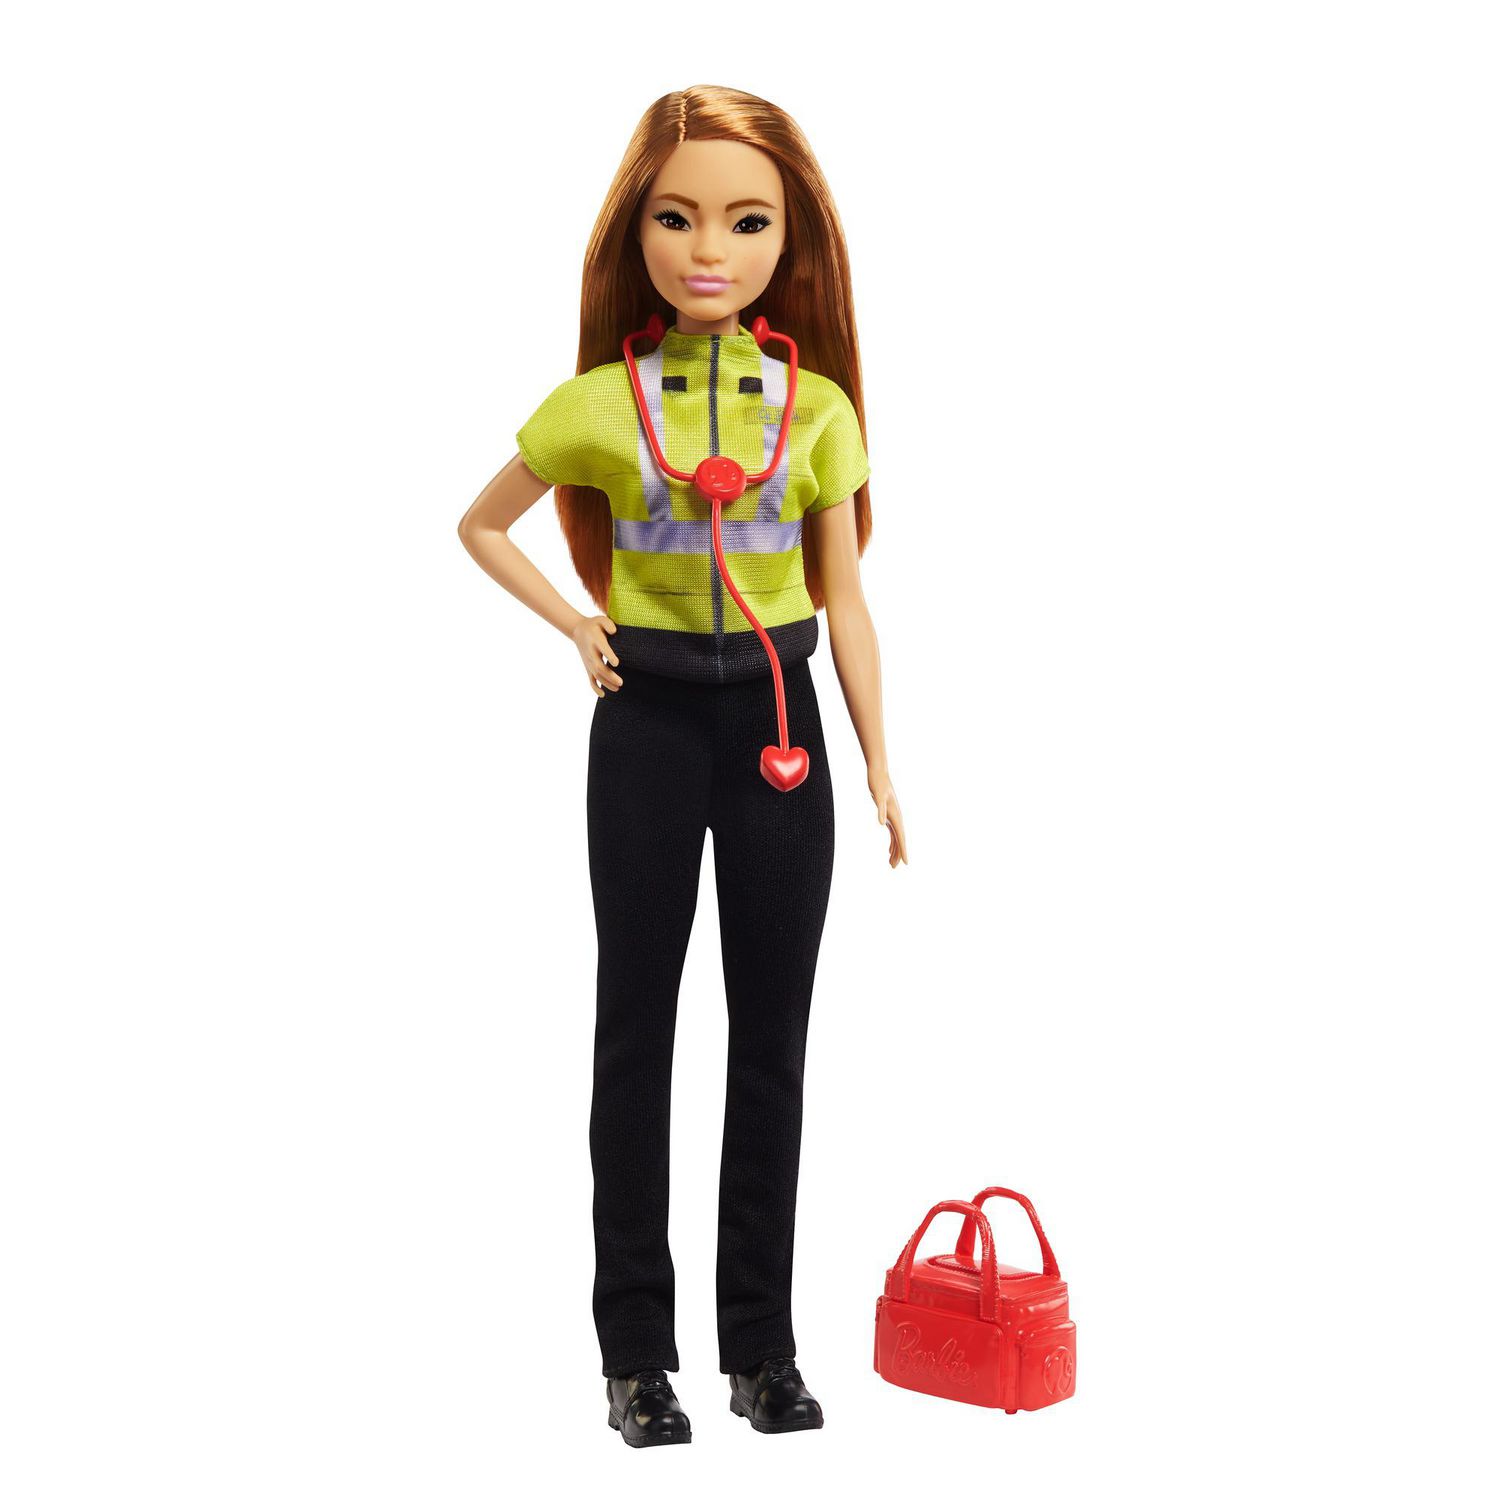 Barbie Paramedic Doll, Petite Brunette (12-in/30.40-cm), Ages 3